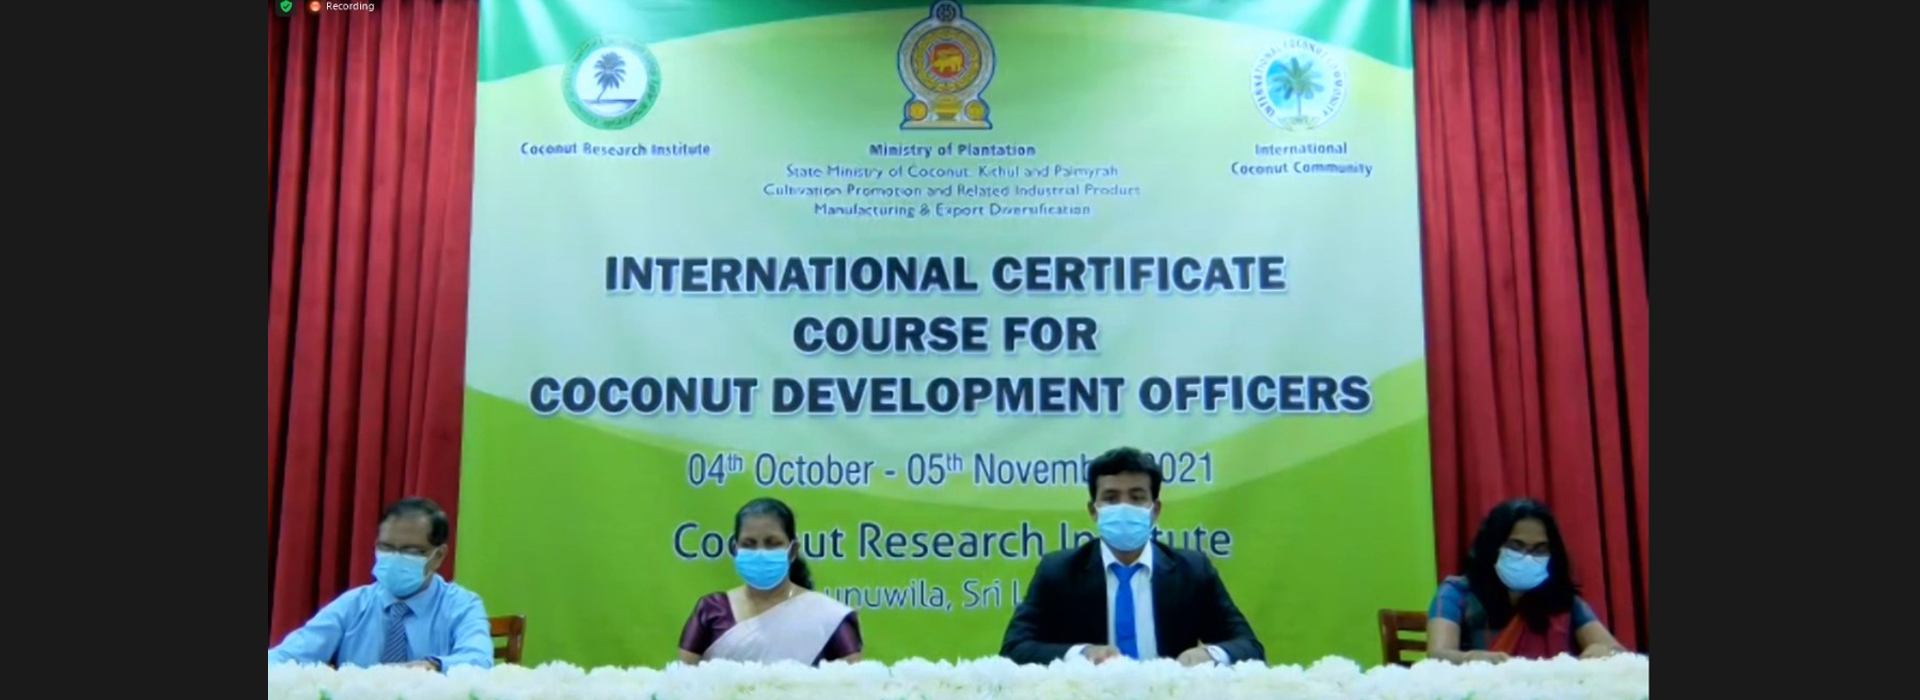 international-certificate-course-for-coconut-development-officers-kick-started20211109112842.jpg